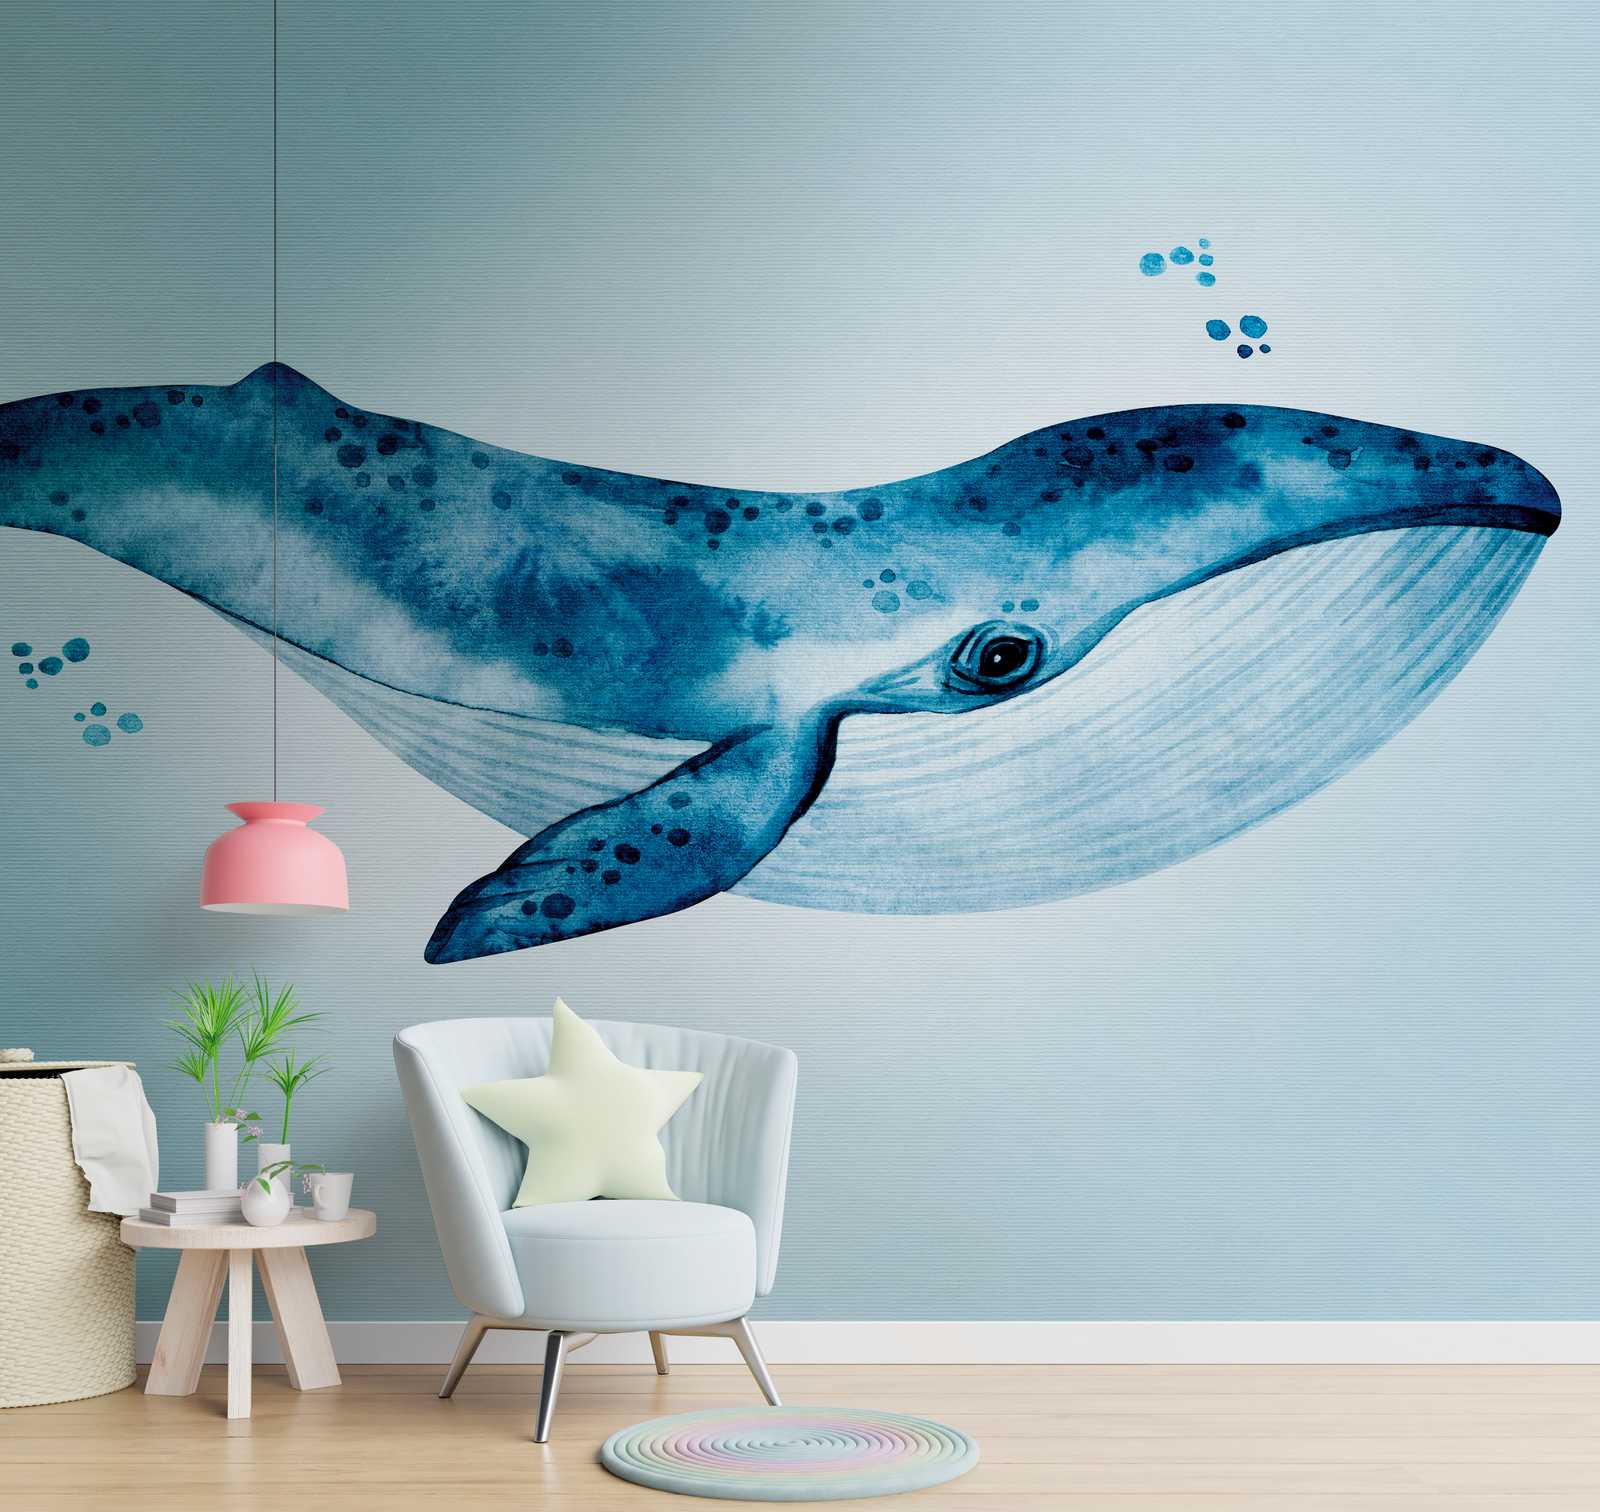             Tapeten Neuheit – Motivtapete Blauwal unter Wasser Aquarell
        